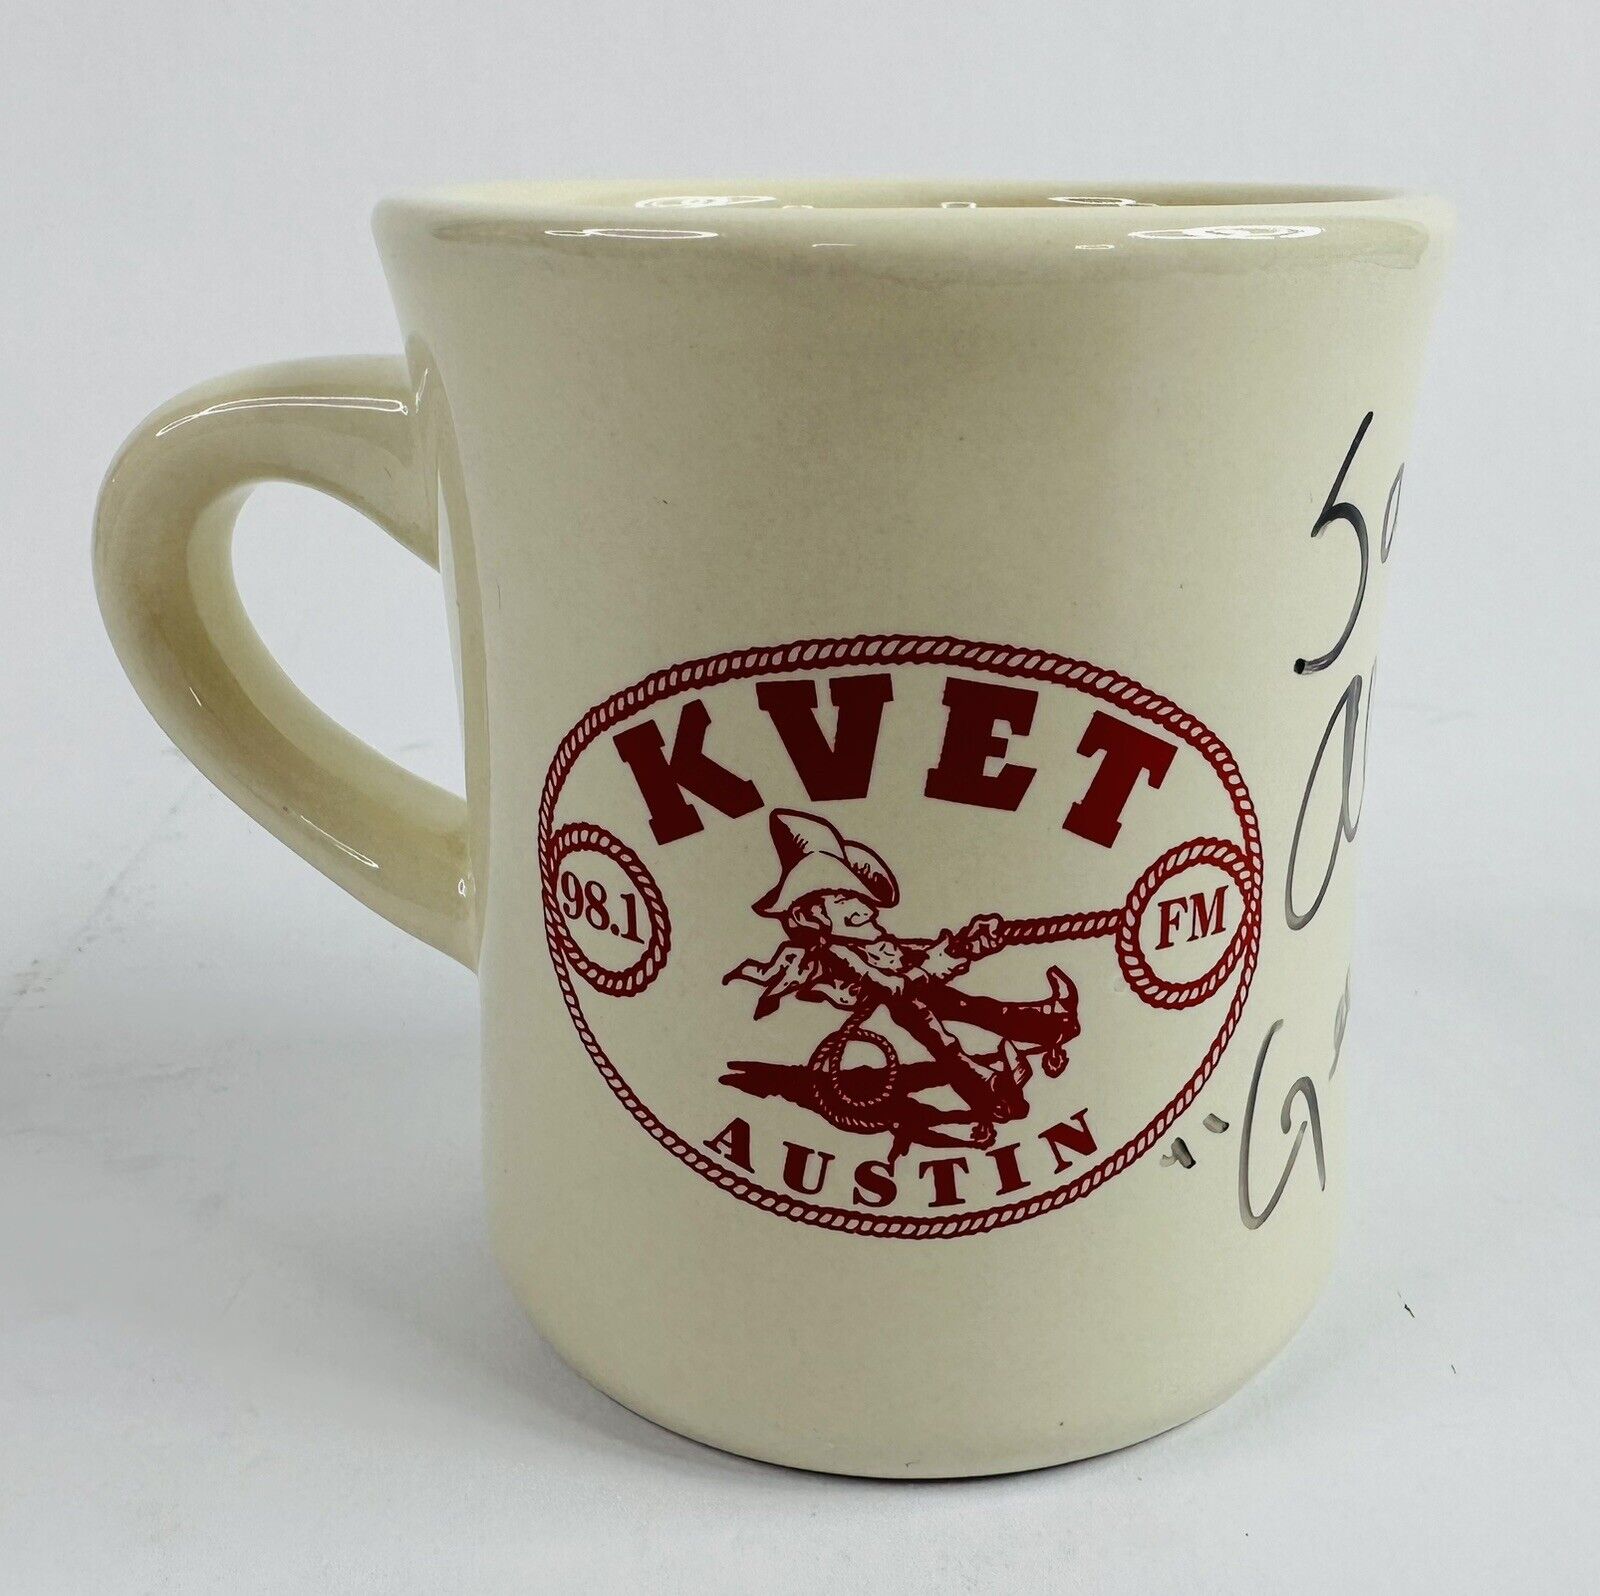 VTG Austin TX KVET Radio 98.1 SAMMY ALLRED “Geezinslaw” Autographed Coffee Mug